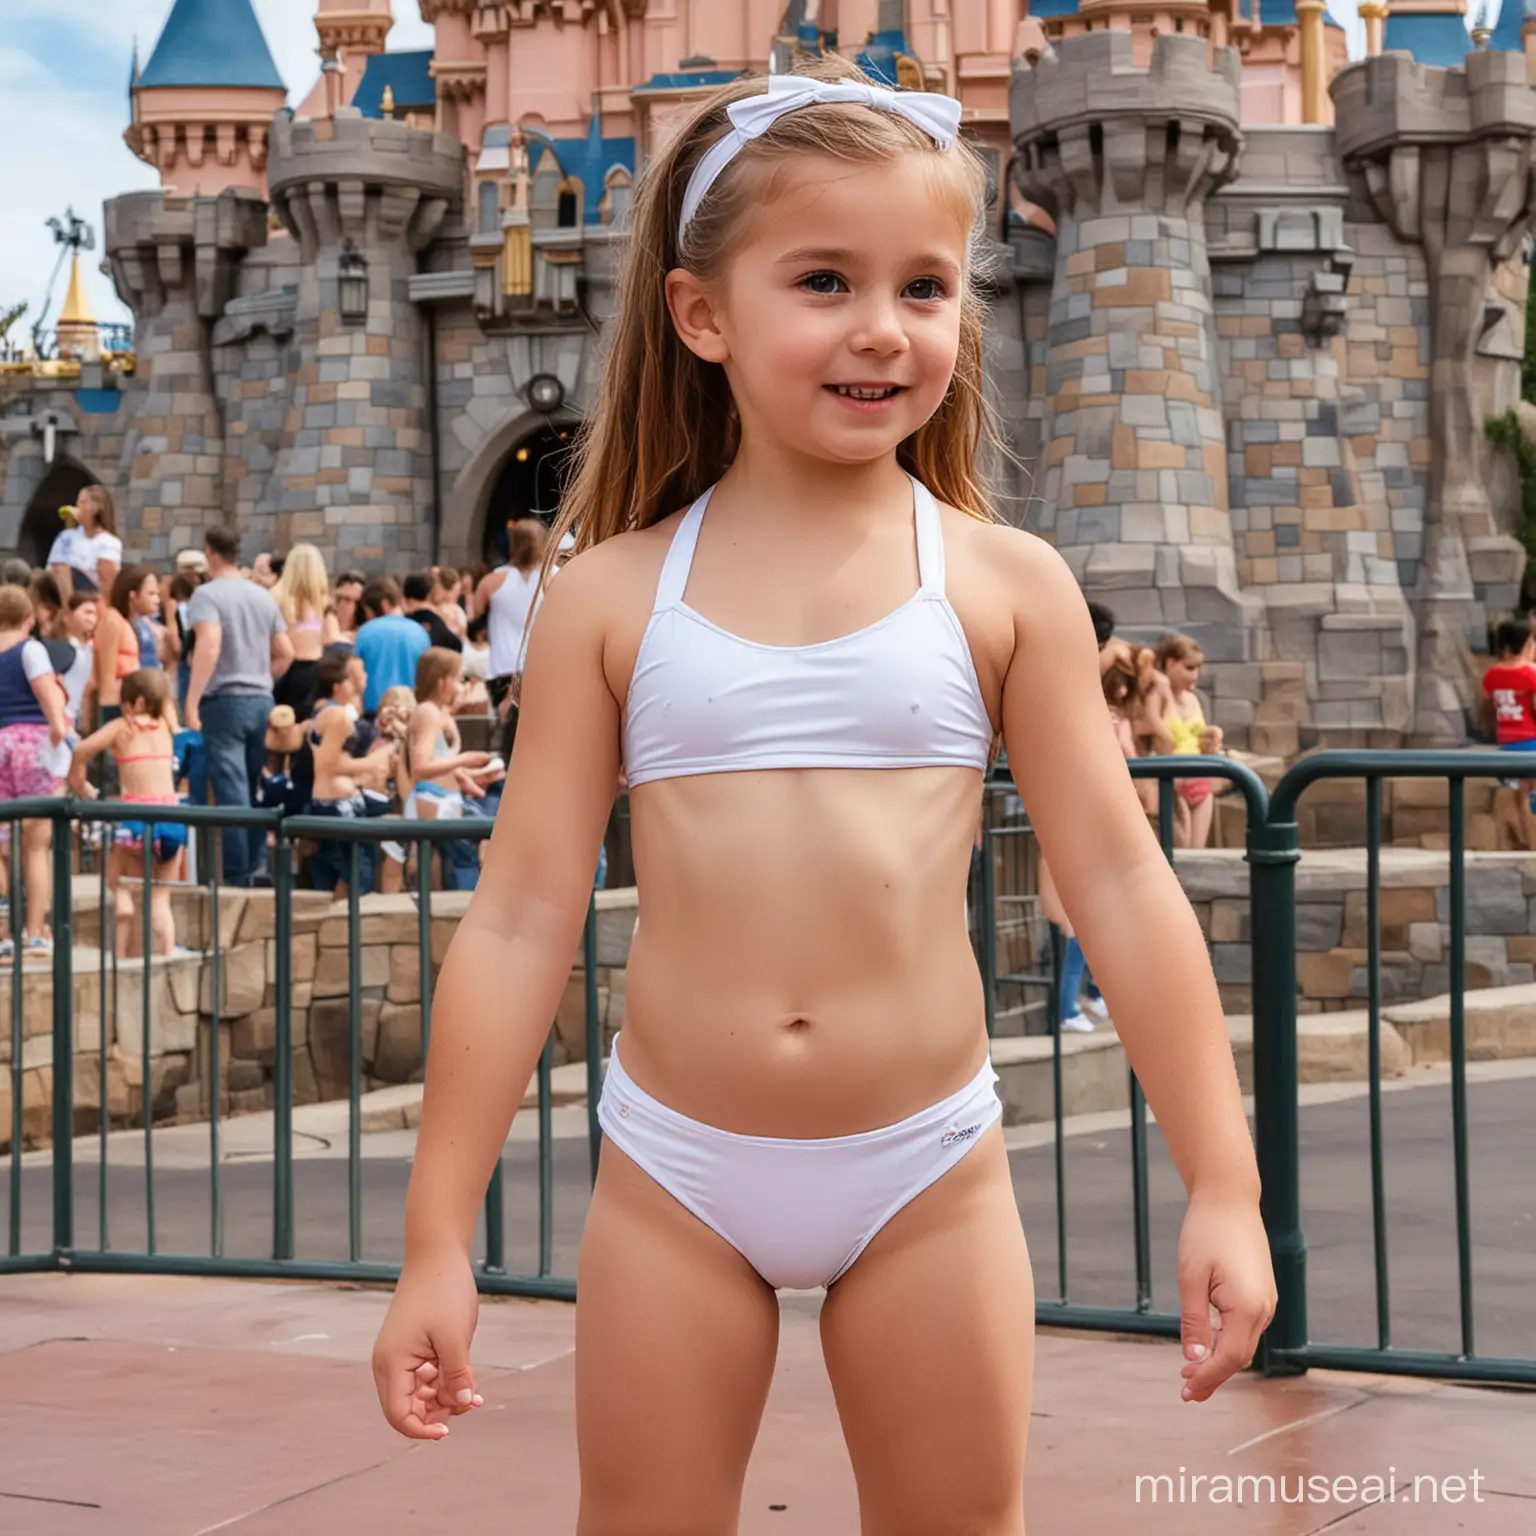 Young Girl in White Bikini Enjoying Disneyland Adventure